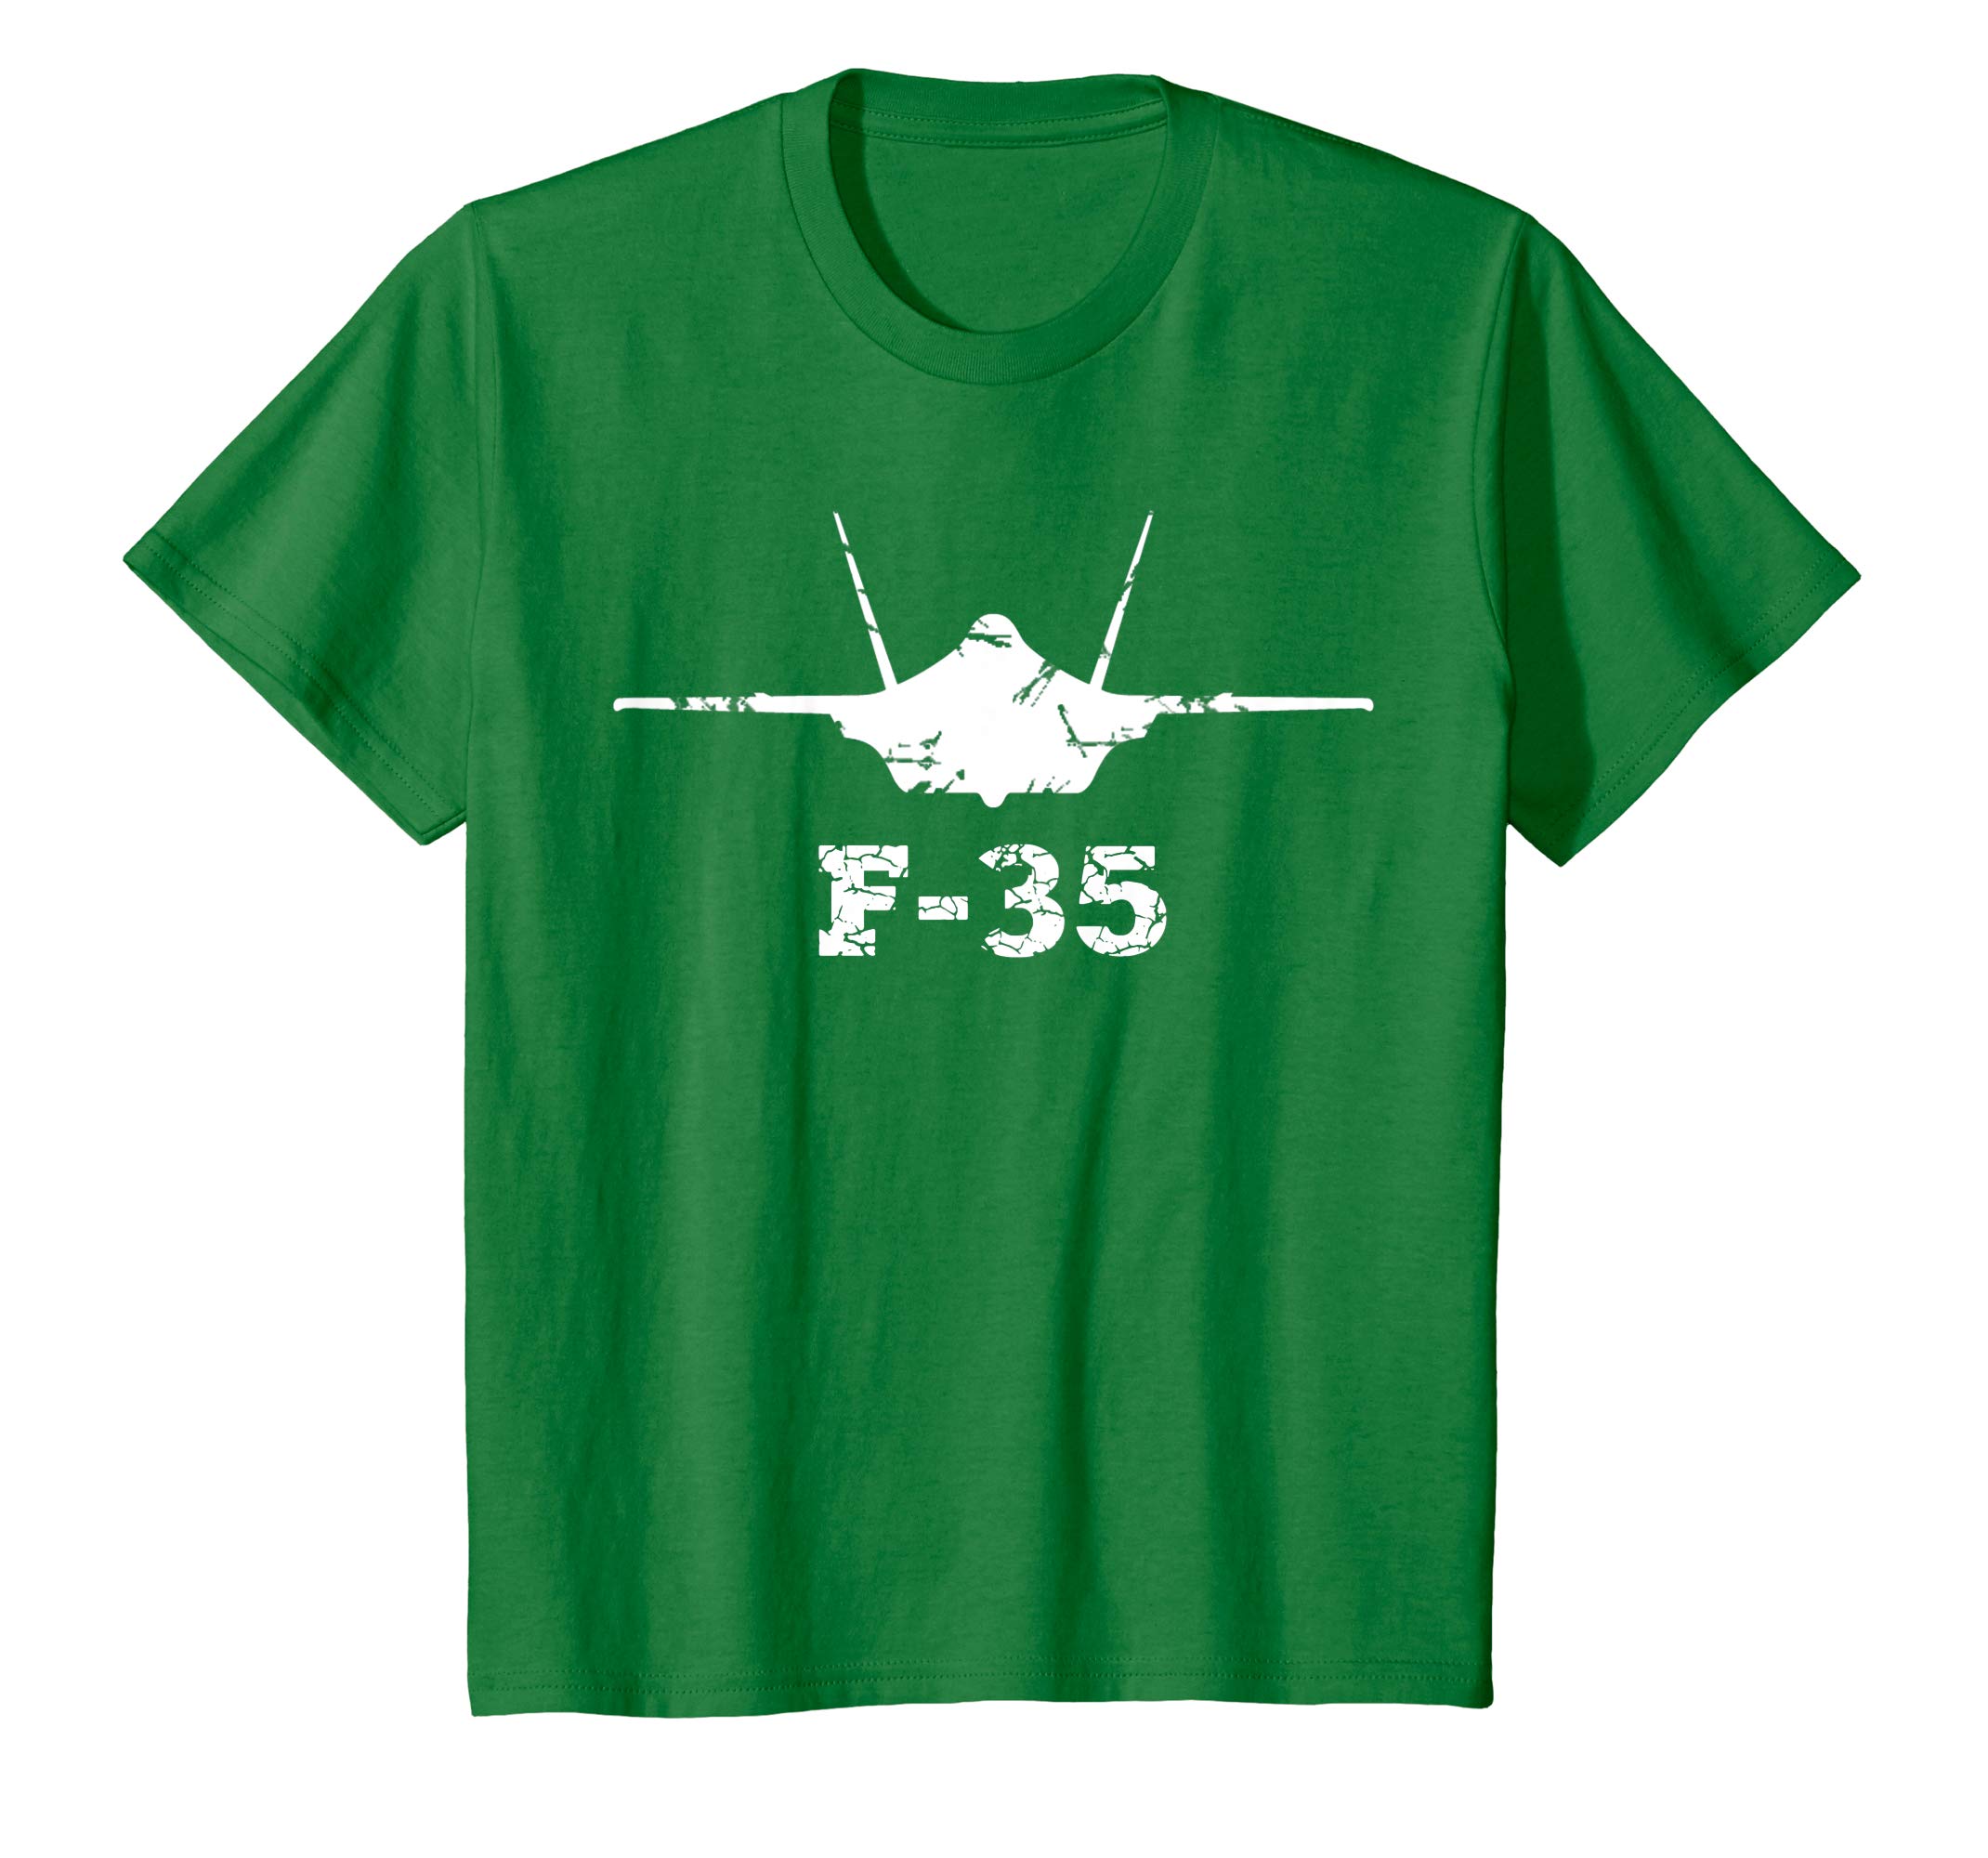 F-35 Logo - Amazon.com: U.S. AIR FORCE ORIGINAL F-35 LOGO T-SHIRT: Clothing